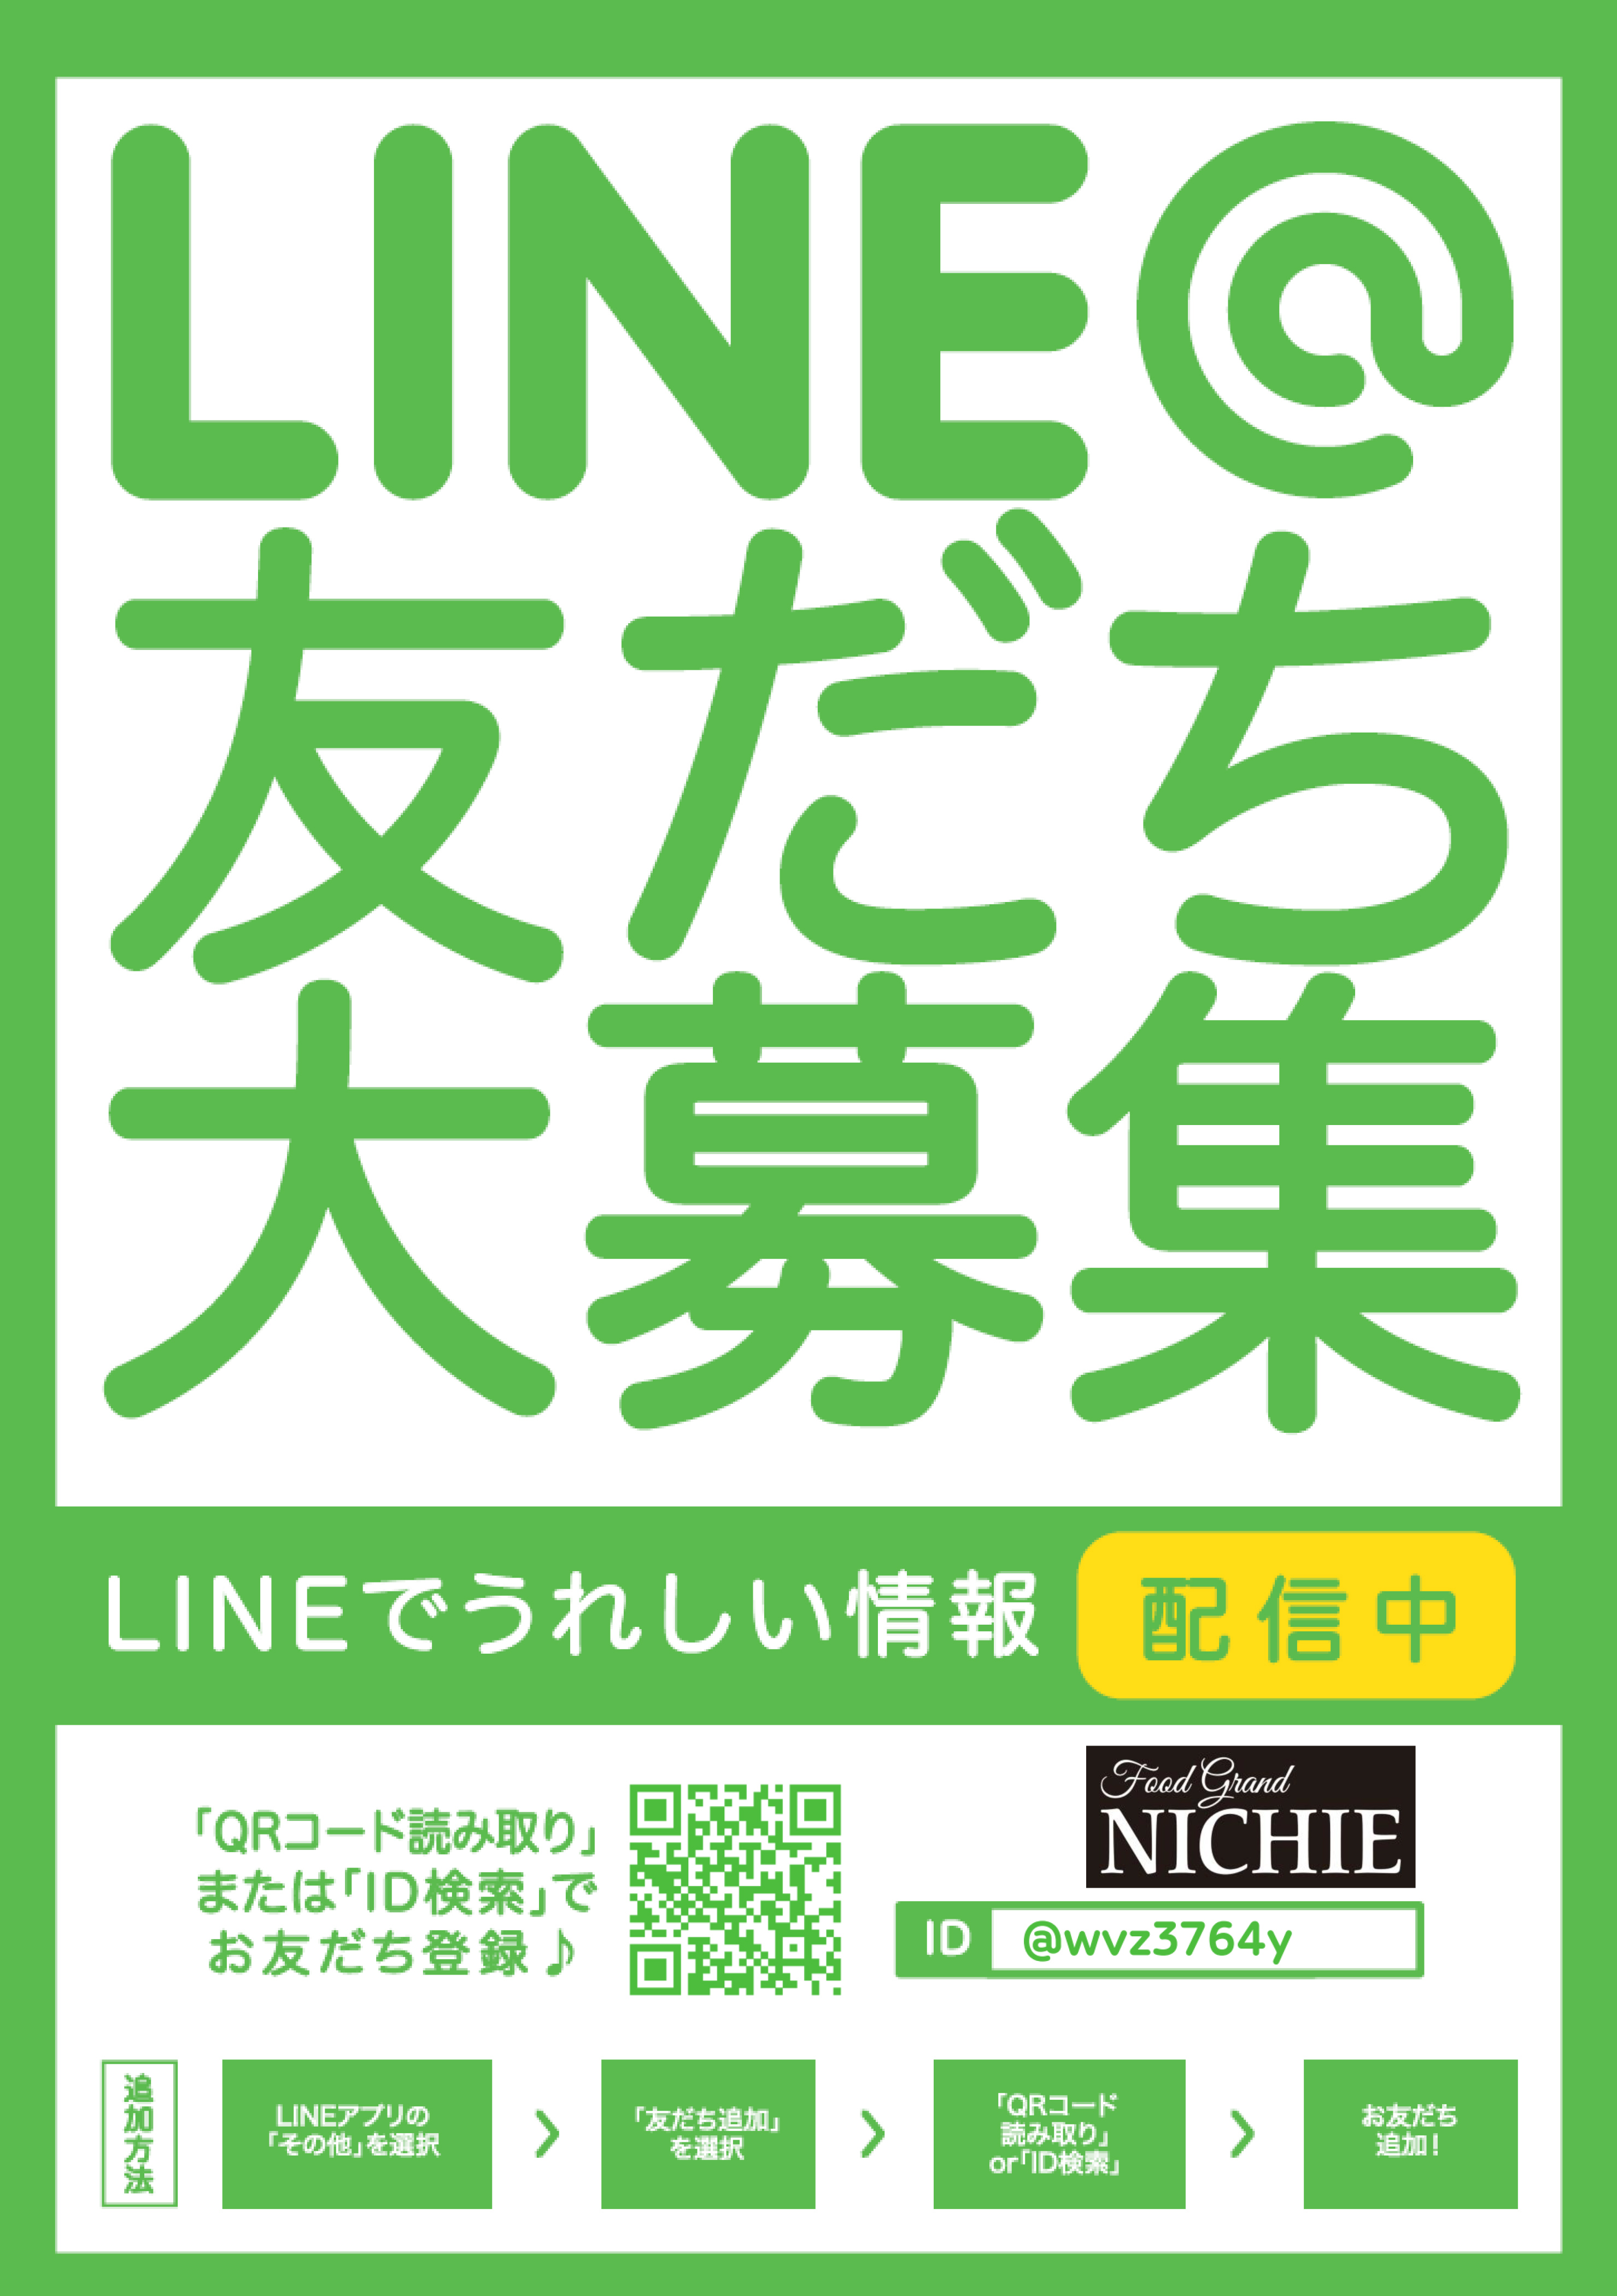 【EKI CITY 広島店】LINE＠にお友達登録してお店の最新情報をGET♪ – ニチエー公式サイト